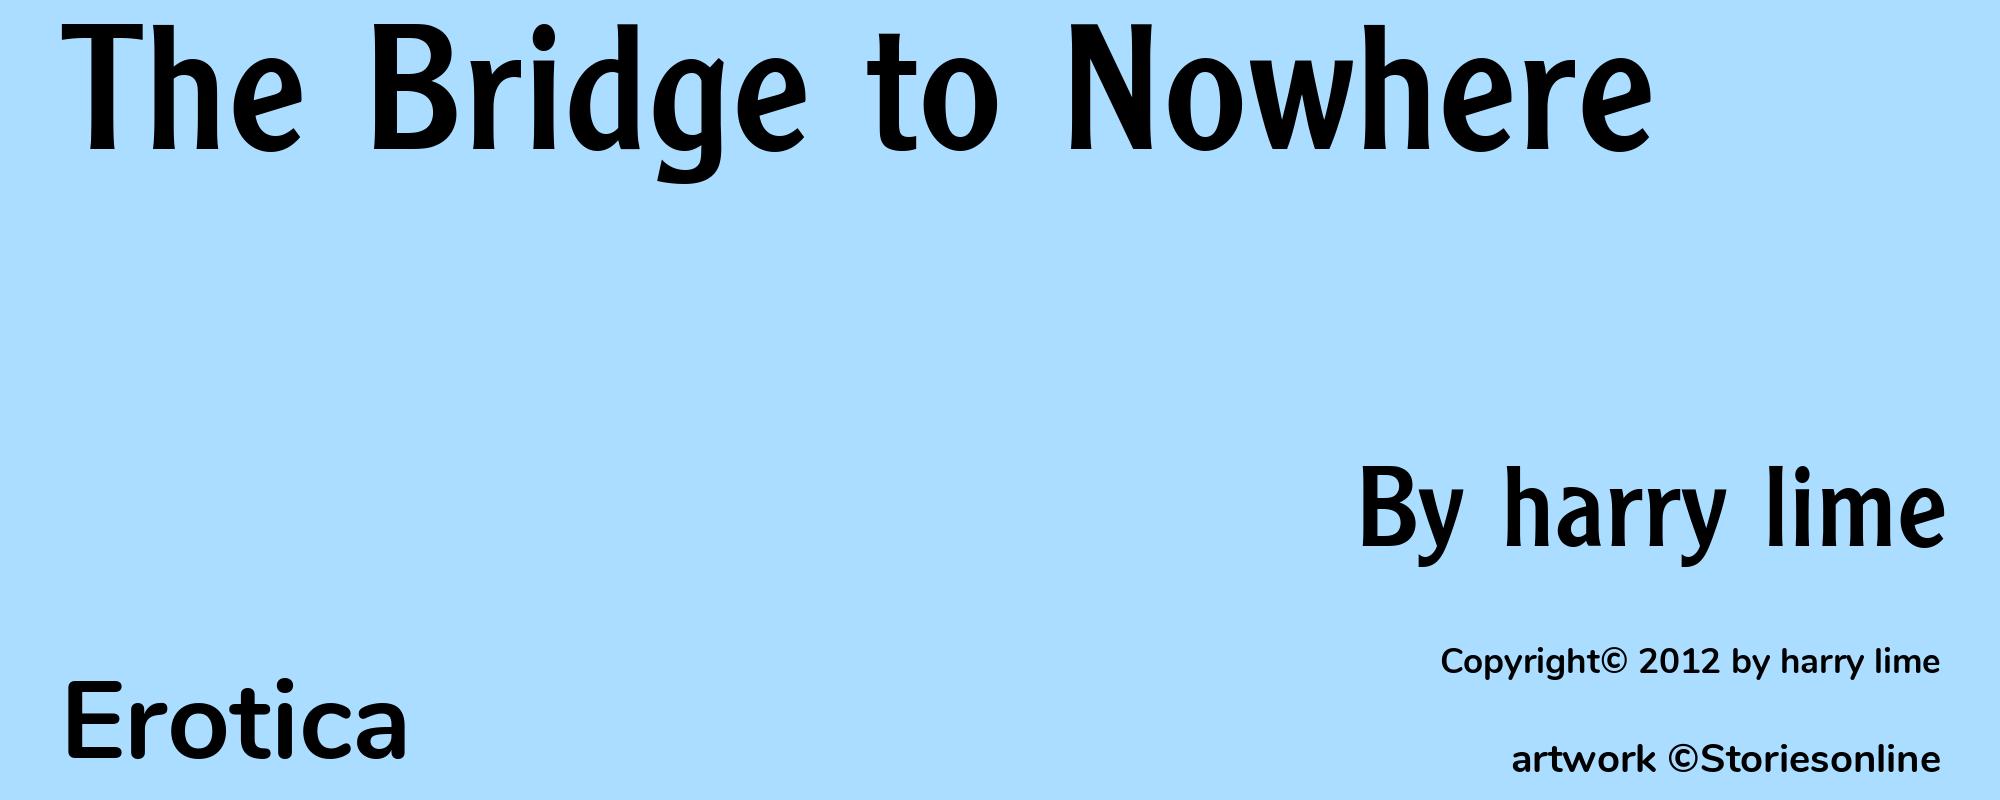 The Bridge to Nowhere - Cover